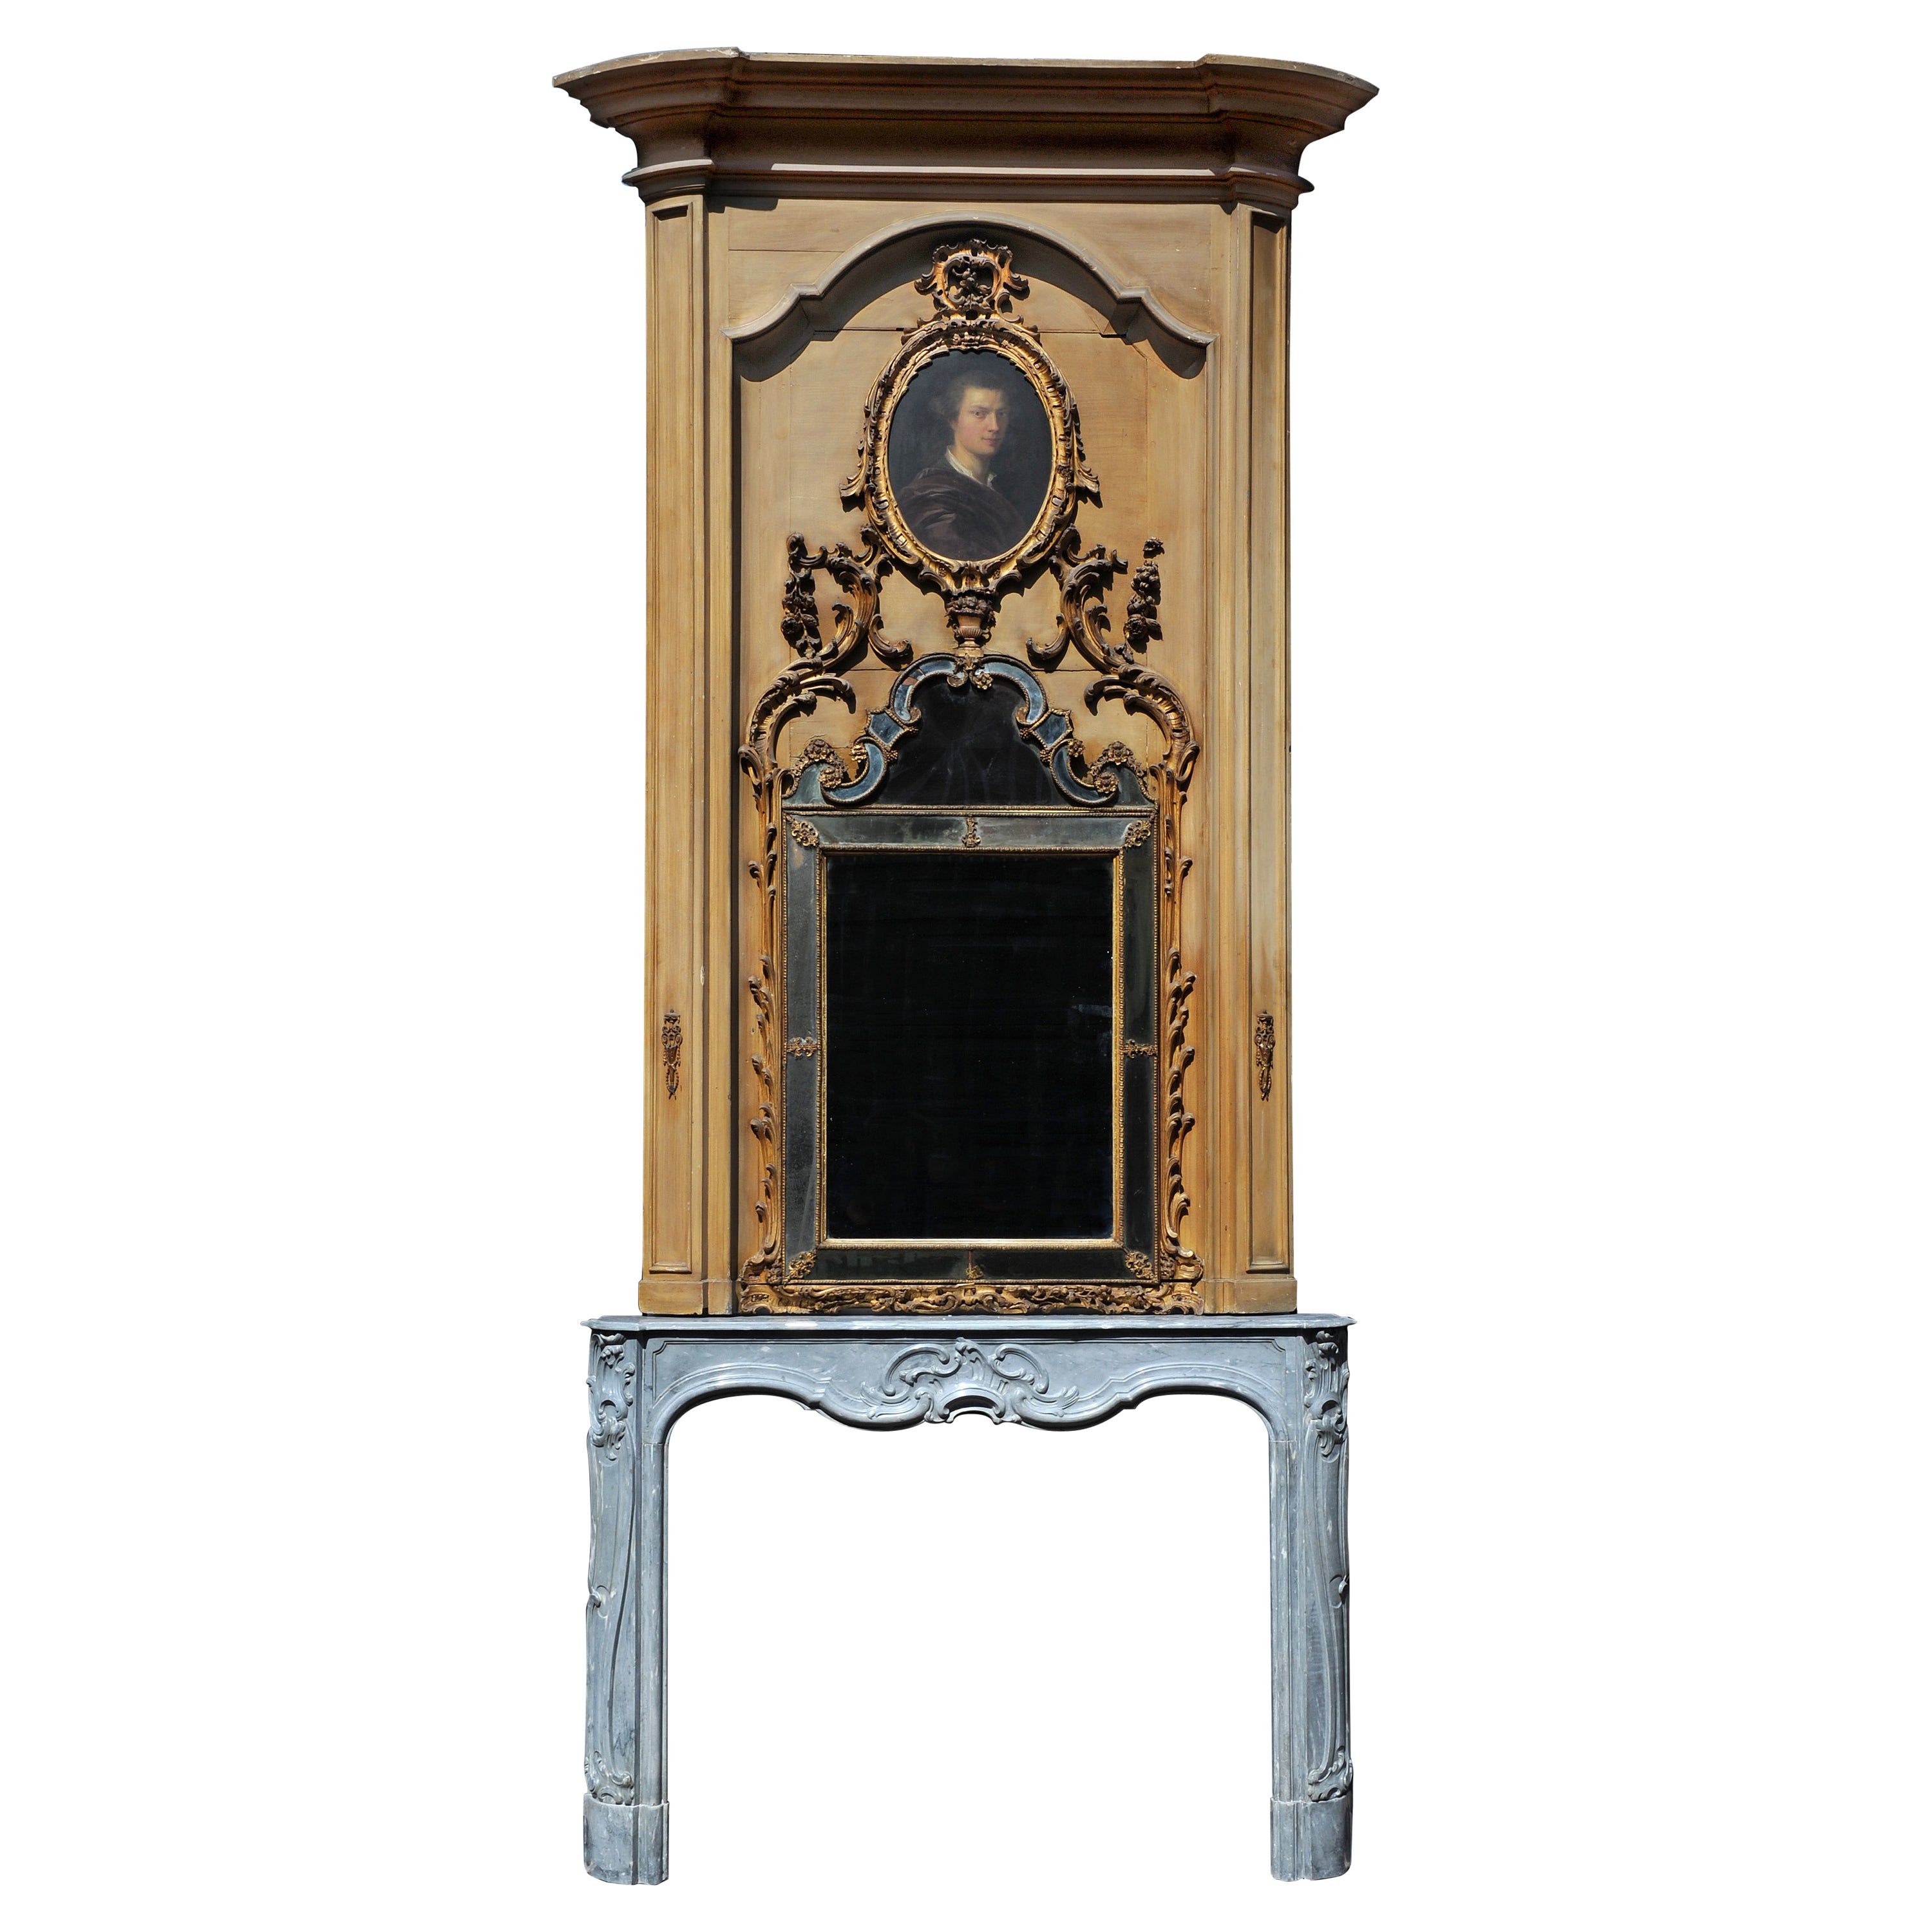 Exceptional Dutch Rococo Fireplace Mantel with Original Trumeau